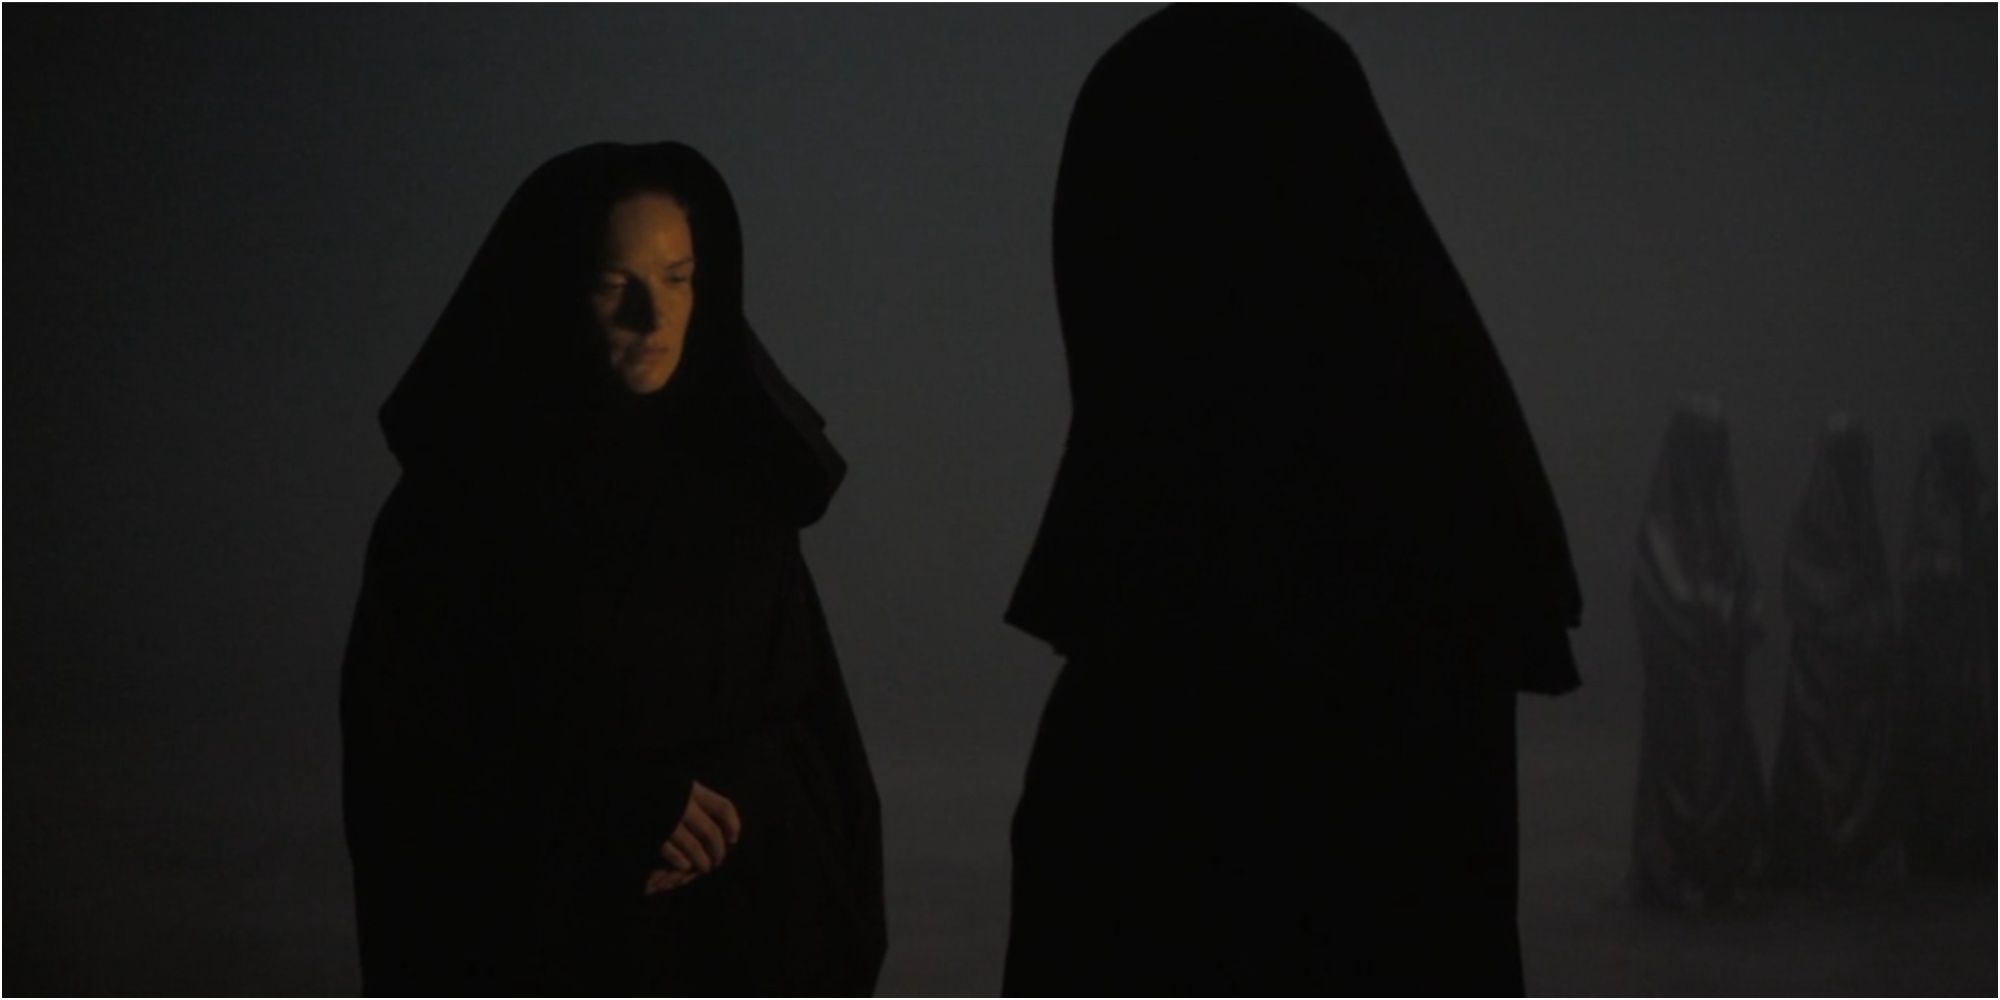 Lady Jessica talking to Gaius Helen Mohiam in Dune.